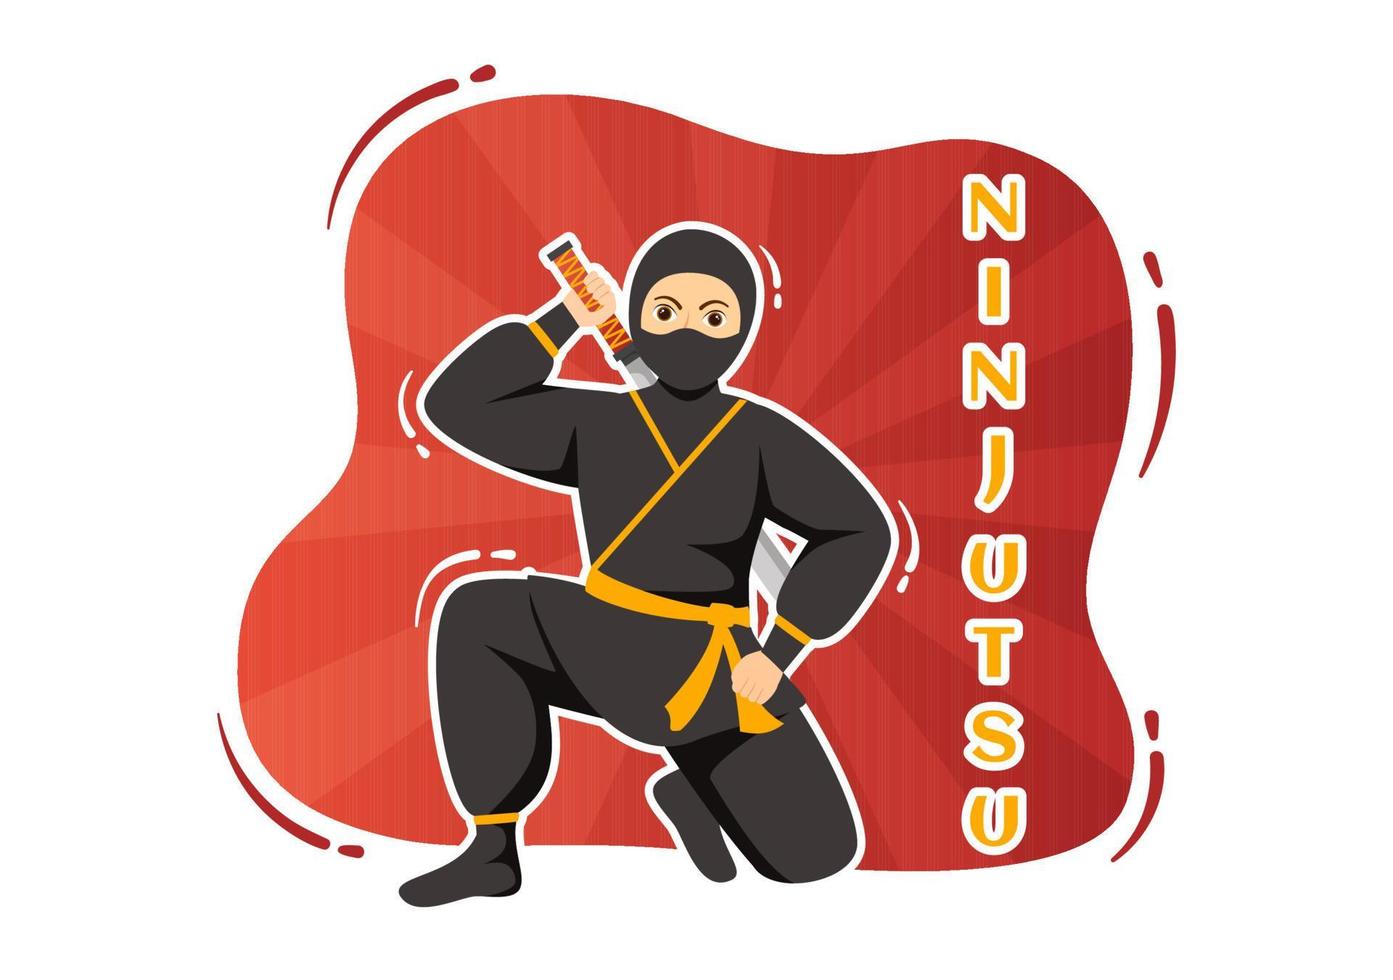 Ninjutsu Vector Illustration with Character Ninja Shinobi from Japan in Flat Cartoon Style Hand Drawn Landing Page Background Templates